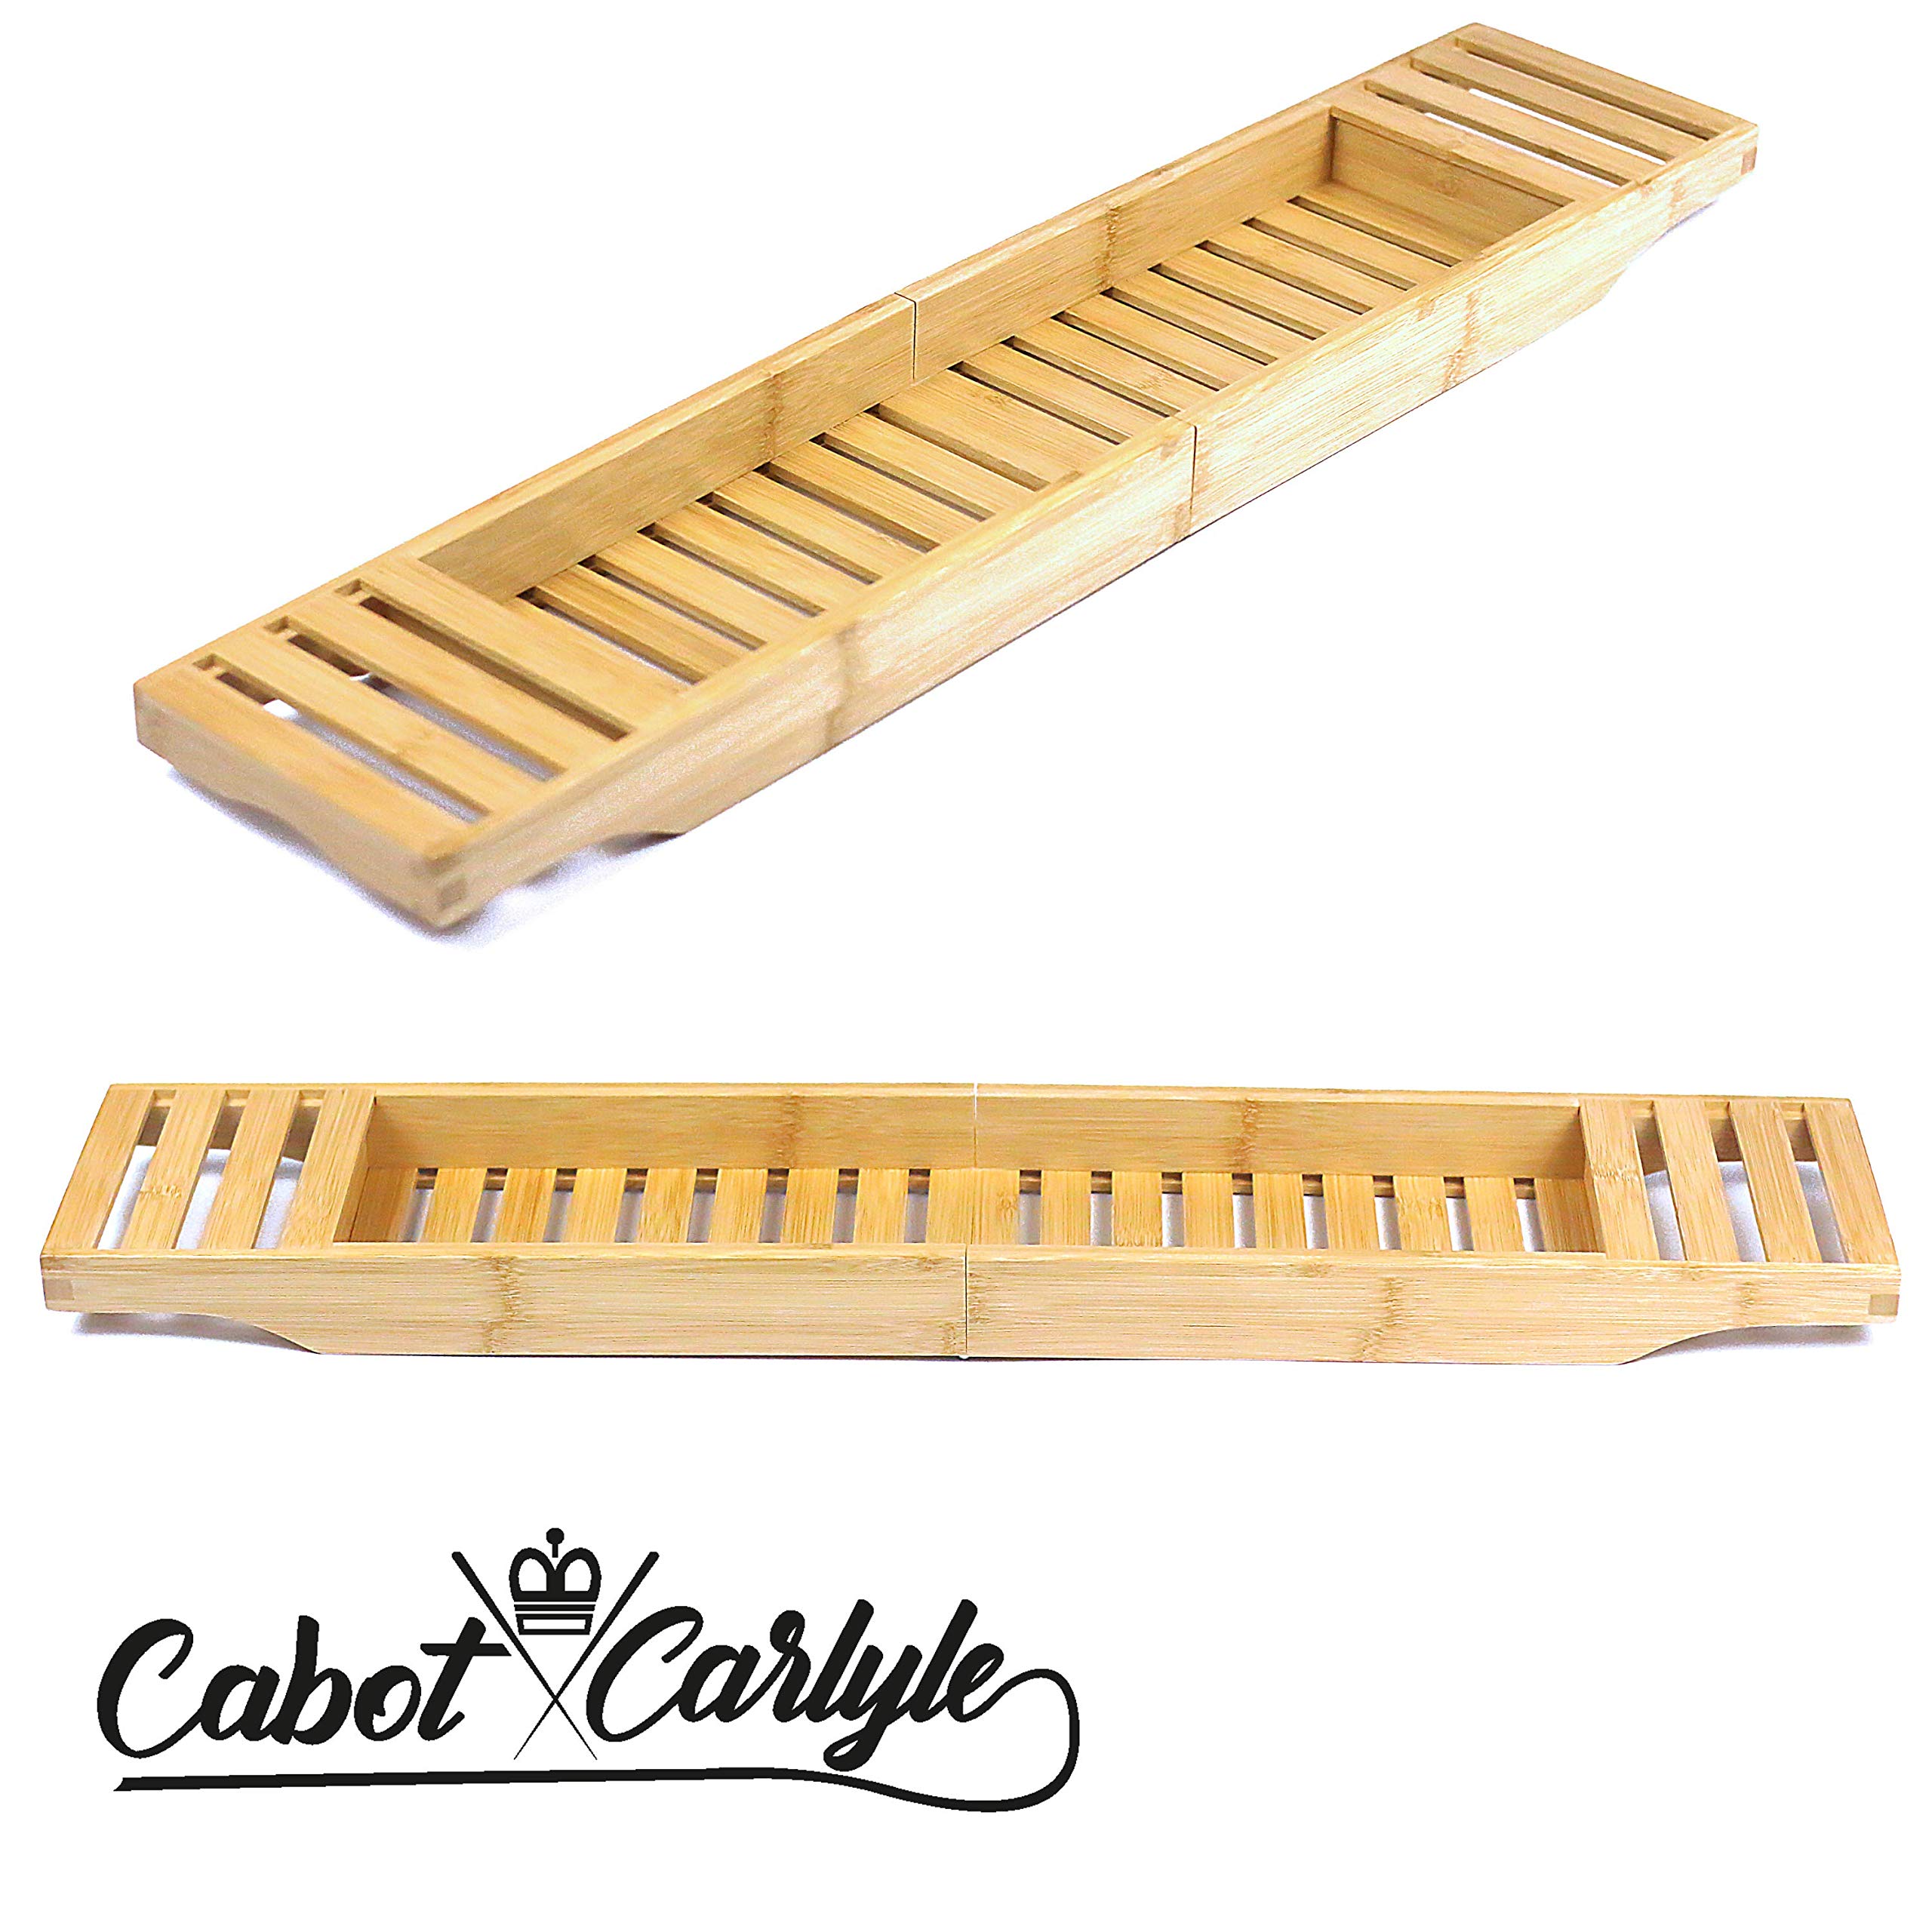 Cabot & Carlyle Luxury Bath Caddy Tray for Tub | Bath Table | Premium Bamboo Bathtub Tray for Tub | Fits All Bath Accessories Wine Glass, Books, Tablets, Cellphones, Shampoo | Bath Shelf Foldable.